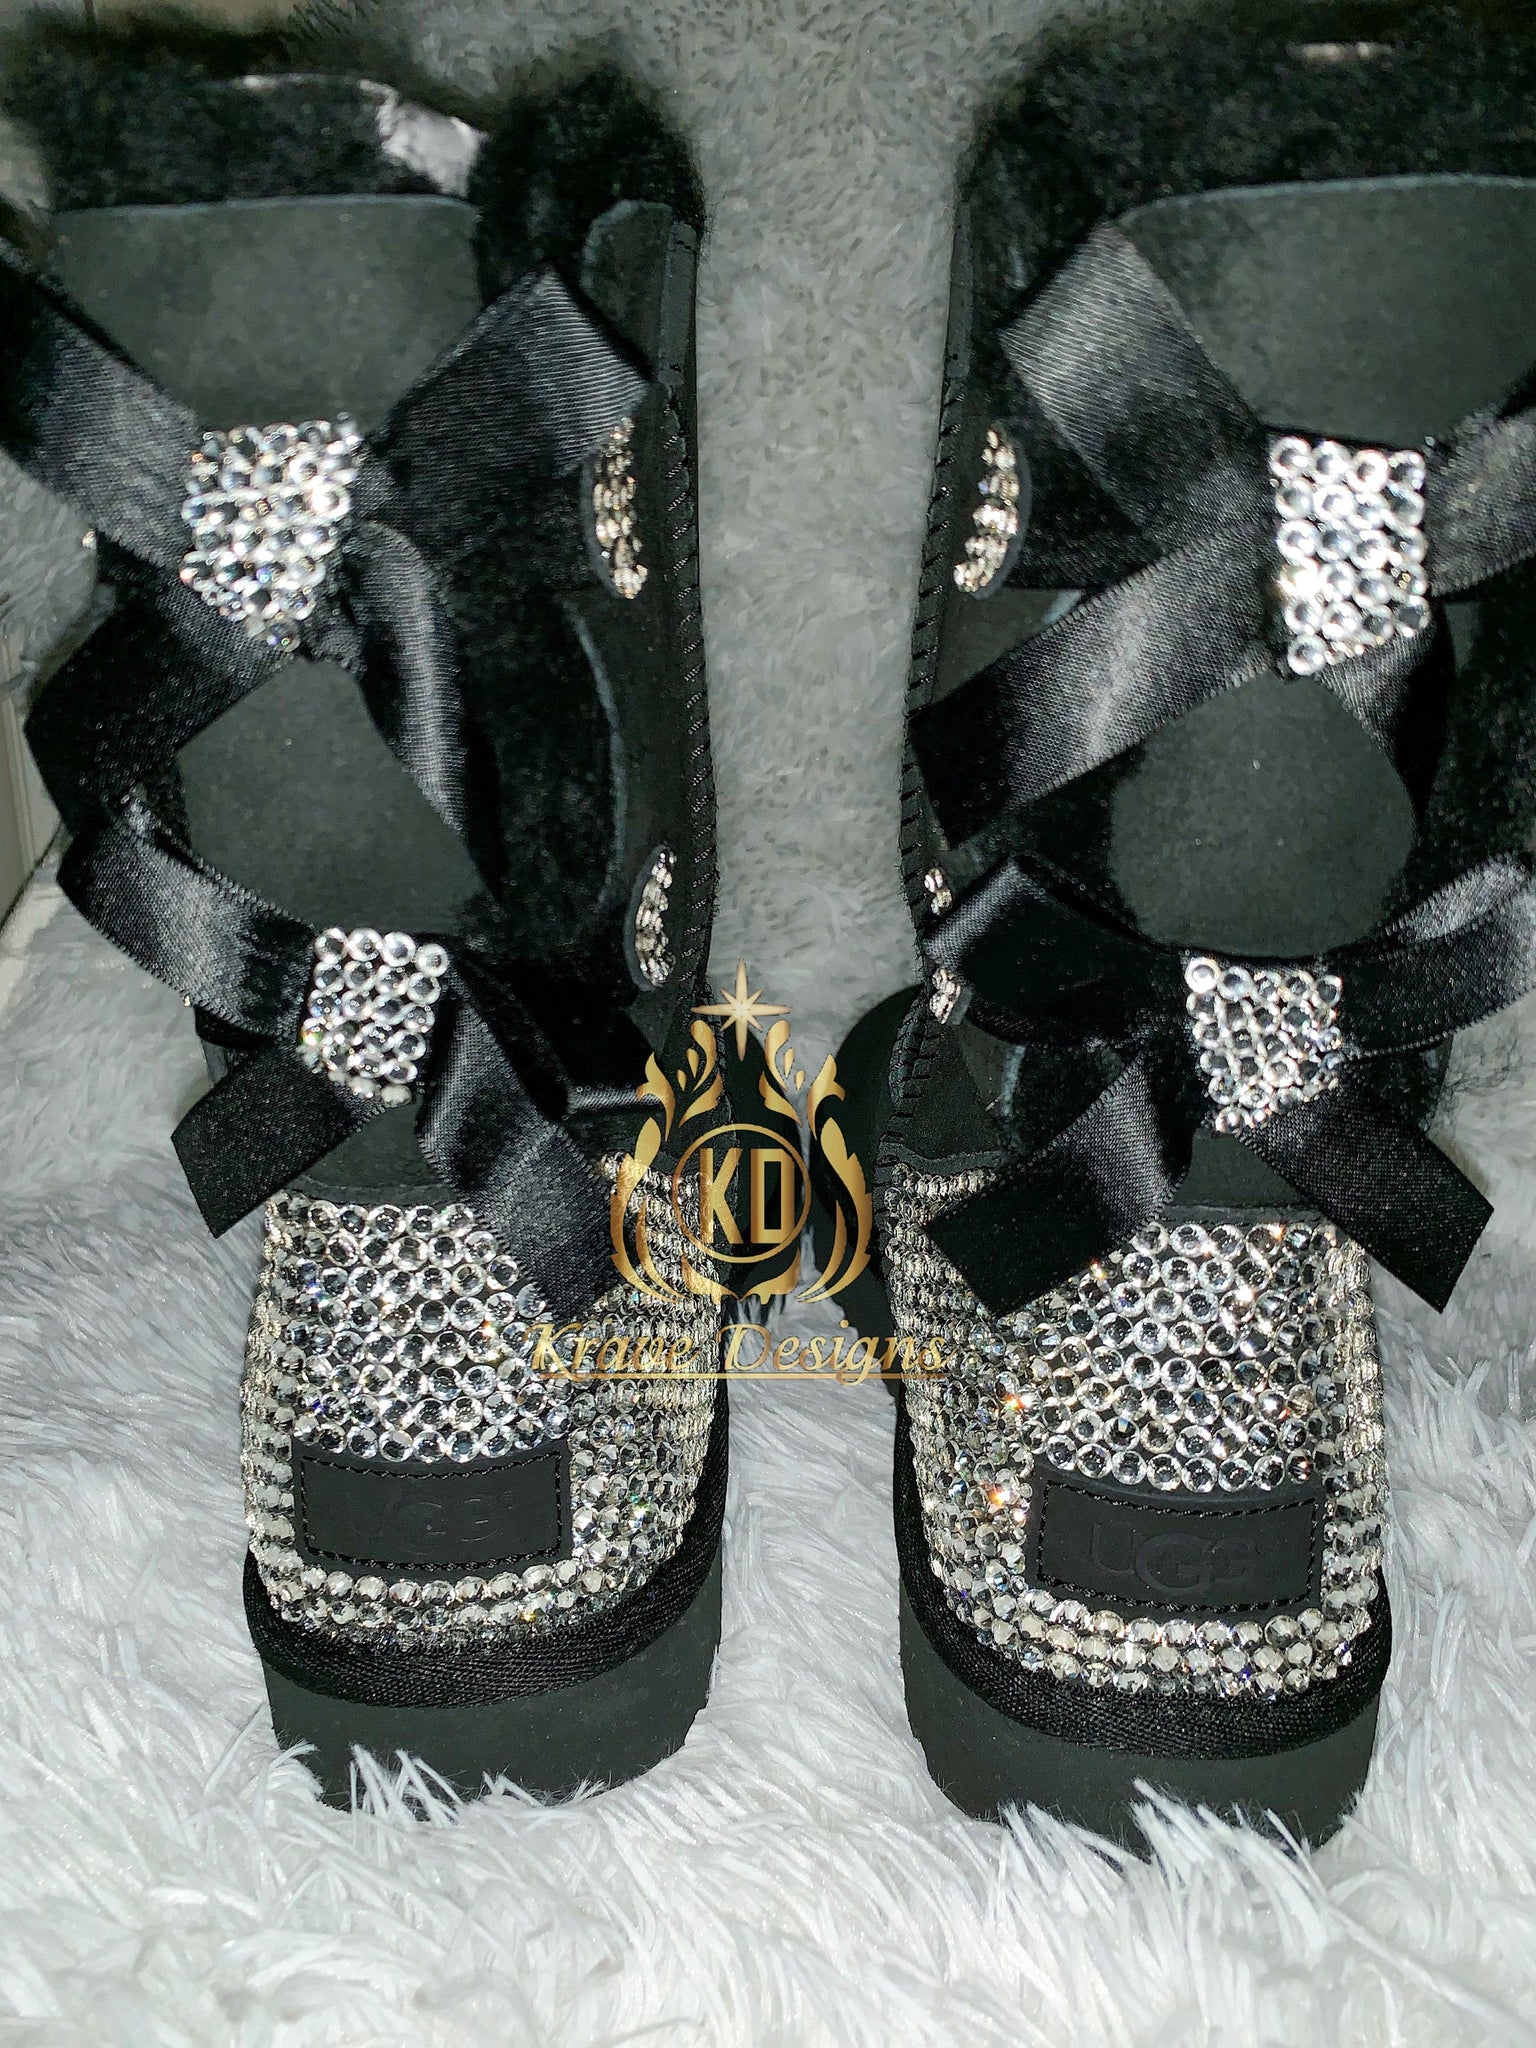 Buy Custom Bailey Buttom UGG Boots Made with Swarovski Crystals